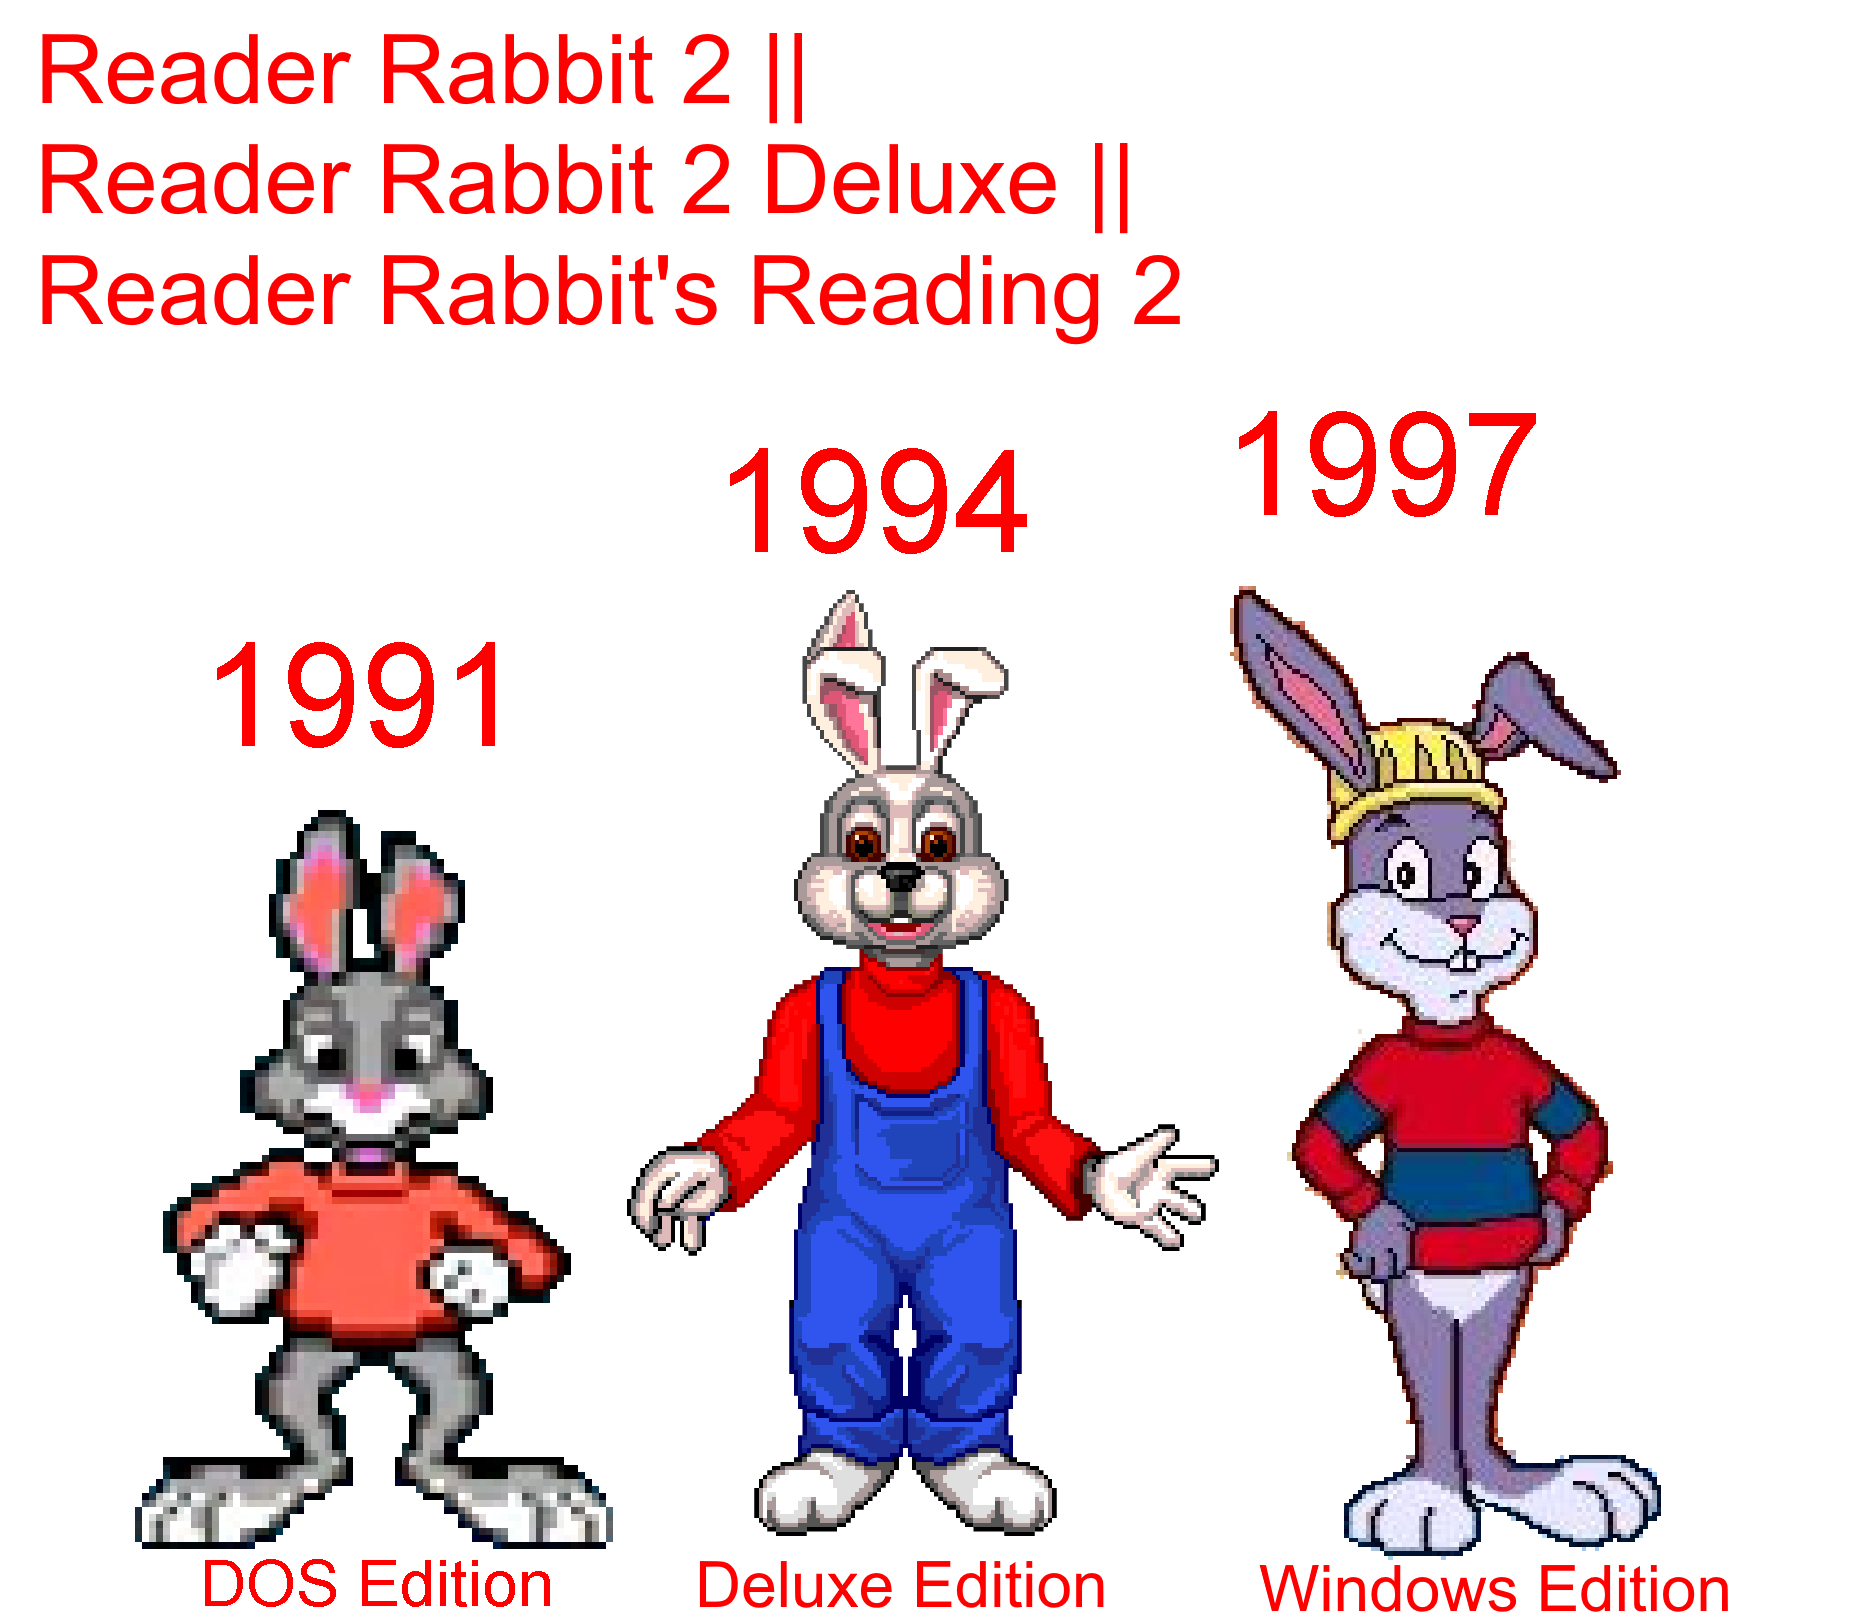 Reader Rabbit 2 designs